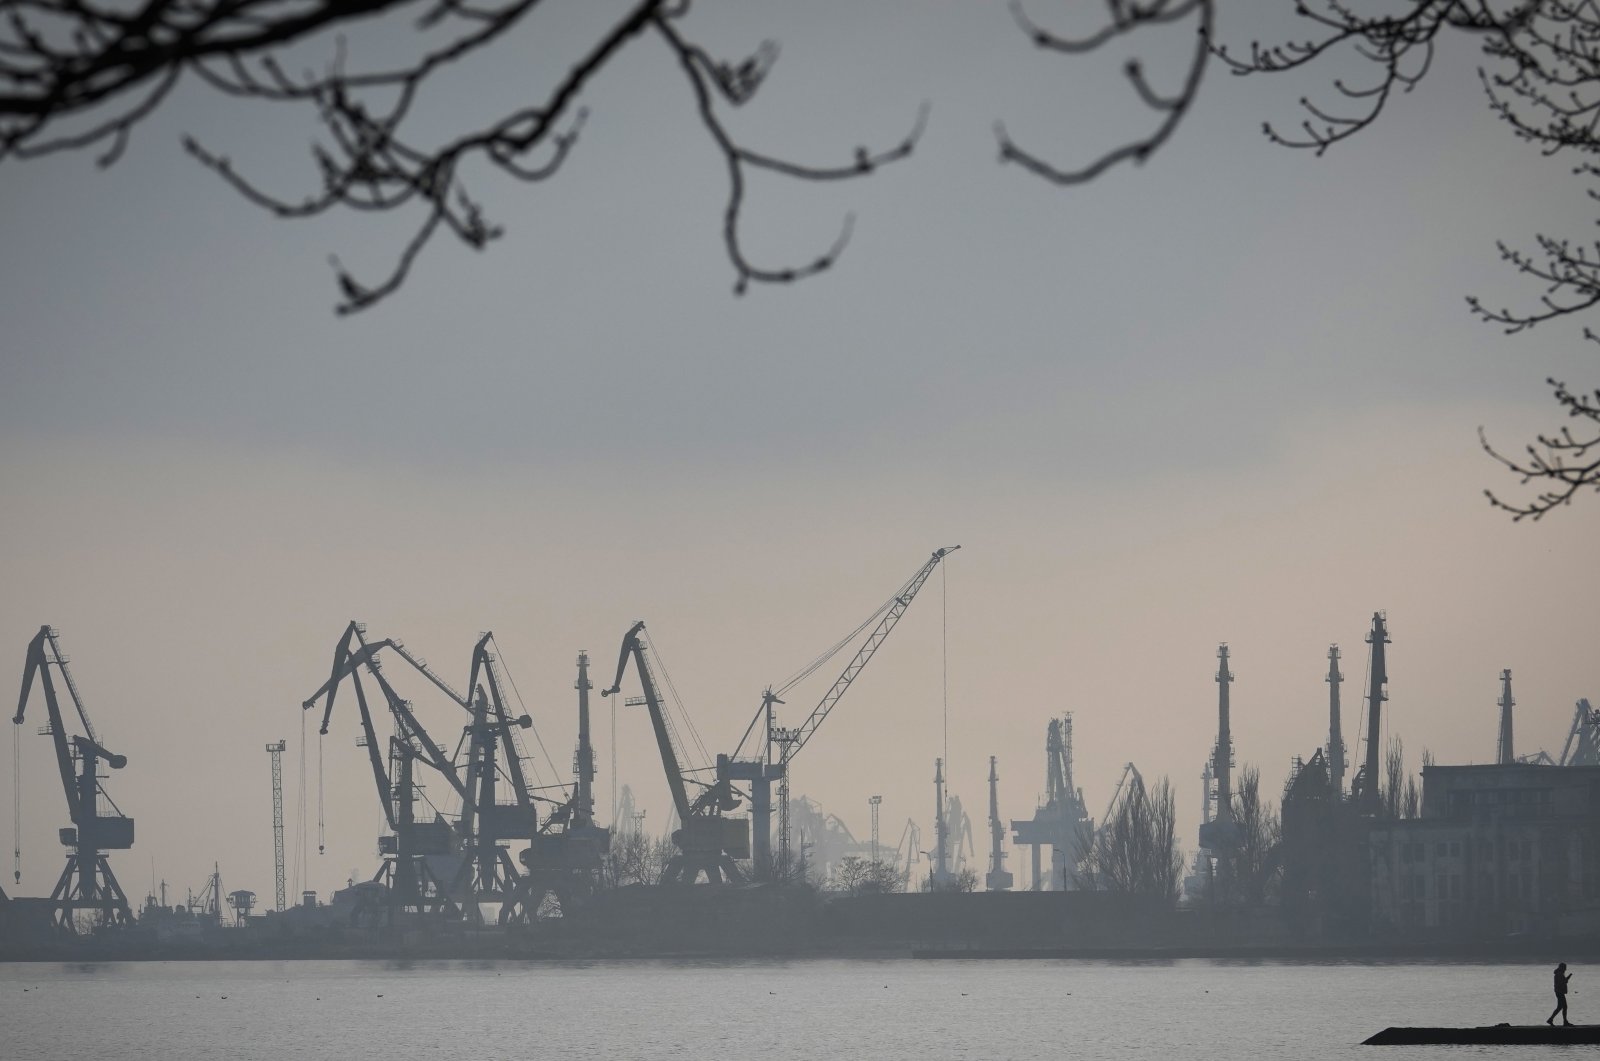 Harbor cranes are seen at the trade port in Mariupol, Ukraine, Feb. 23, 2022. (AP Photo)